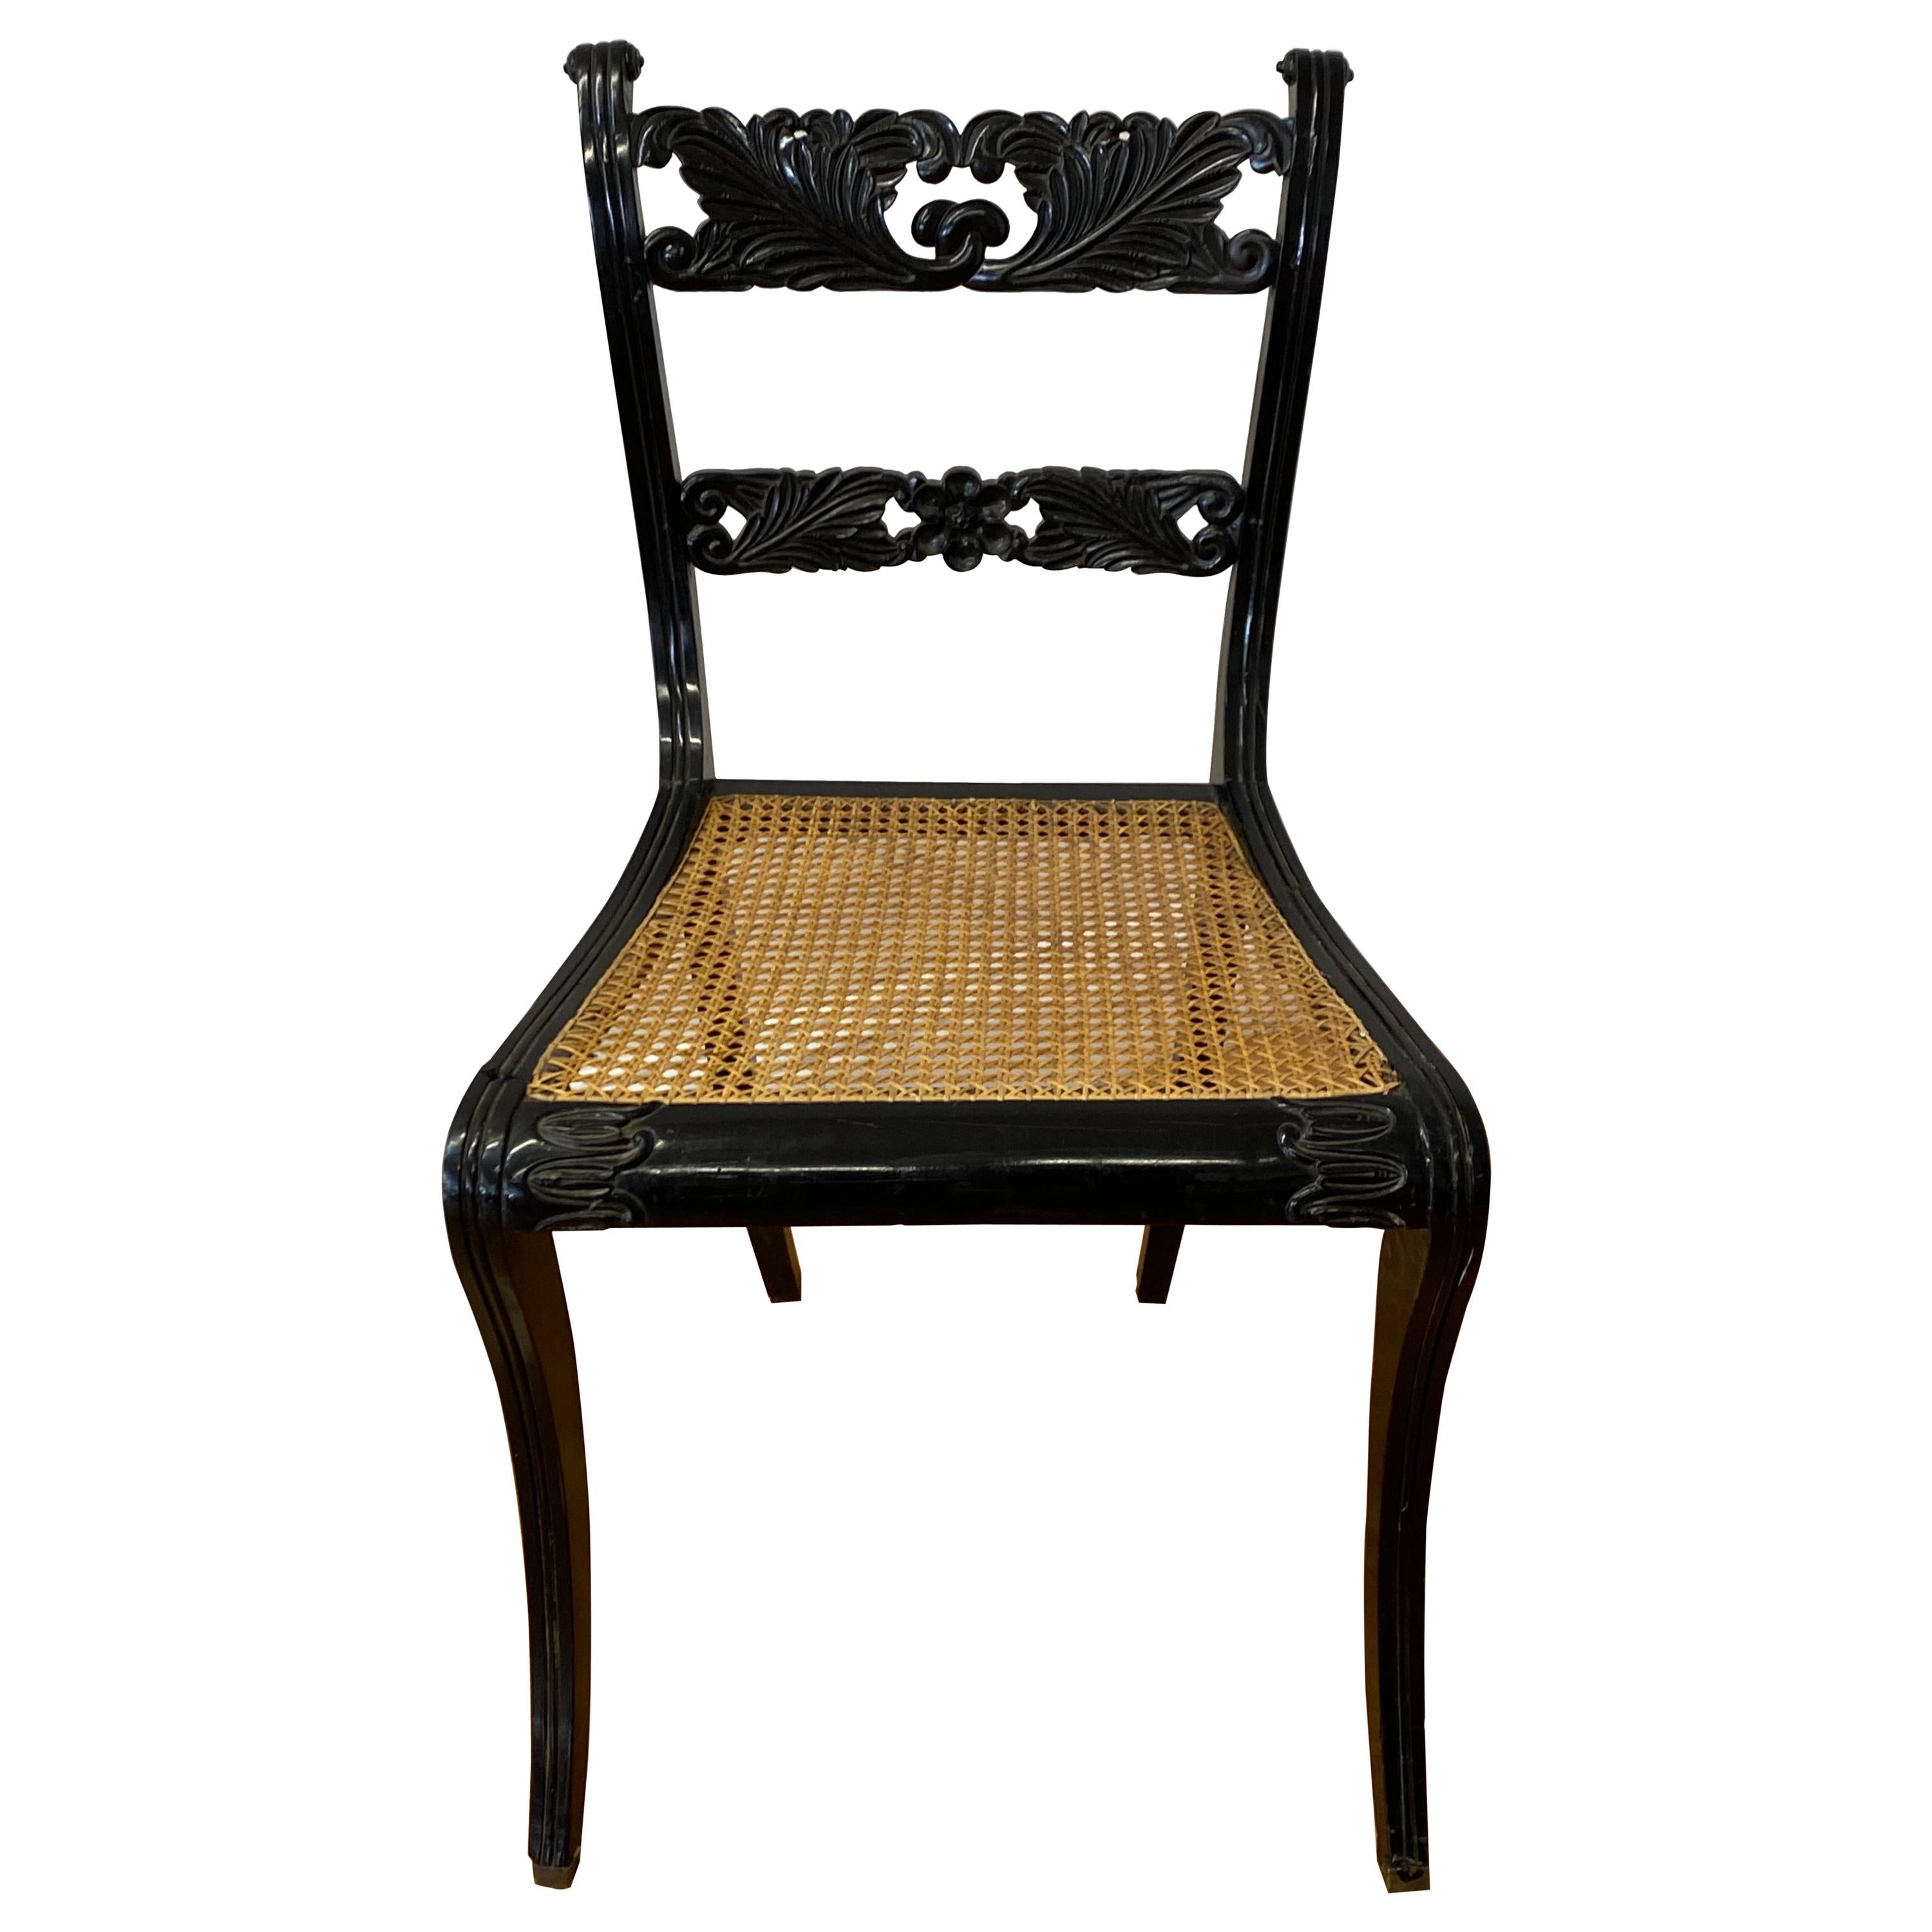 19th Century Trafalgar Upright Chair with Cane Seat & Floral Motif c.1830